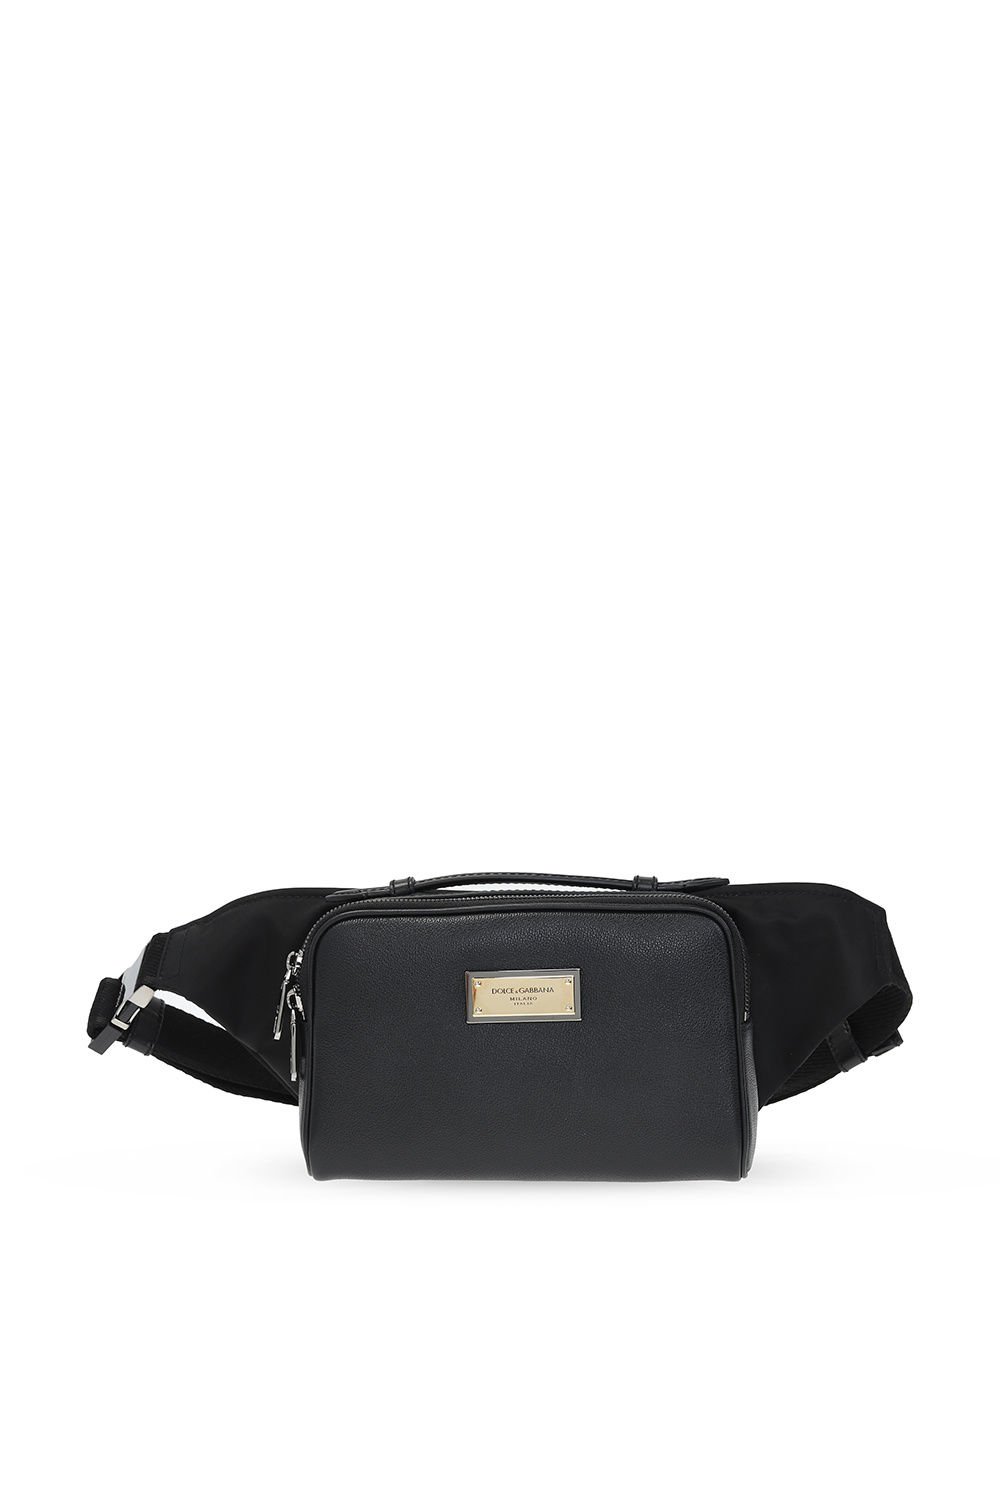 Dolce&Gabbana Black belt bag